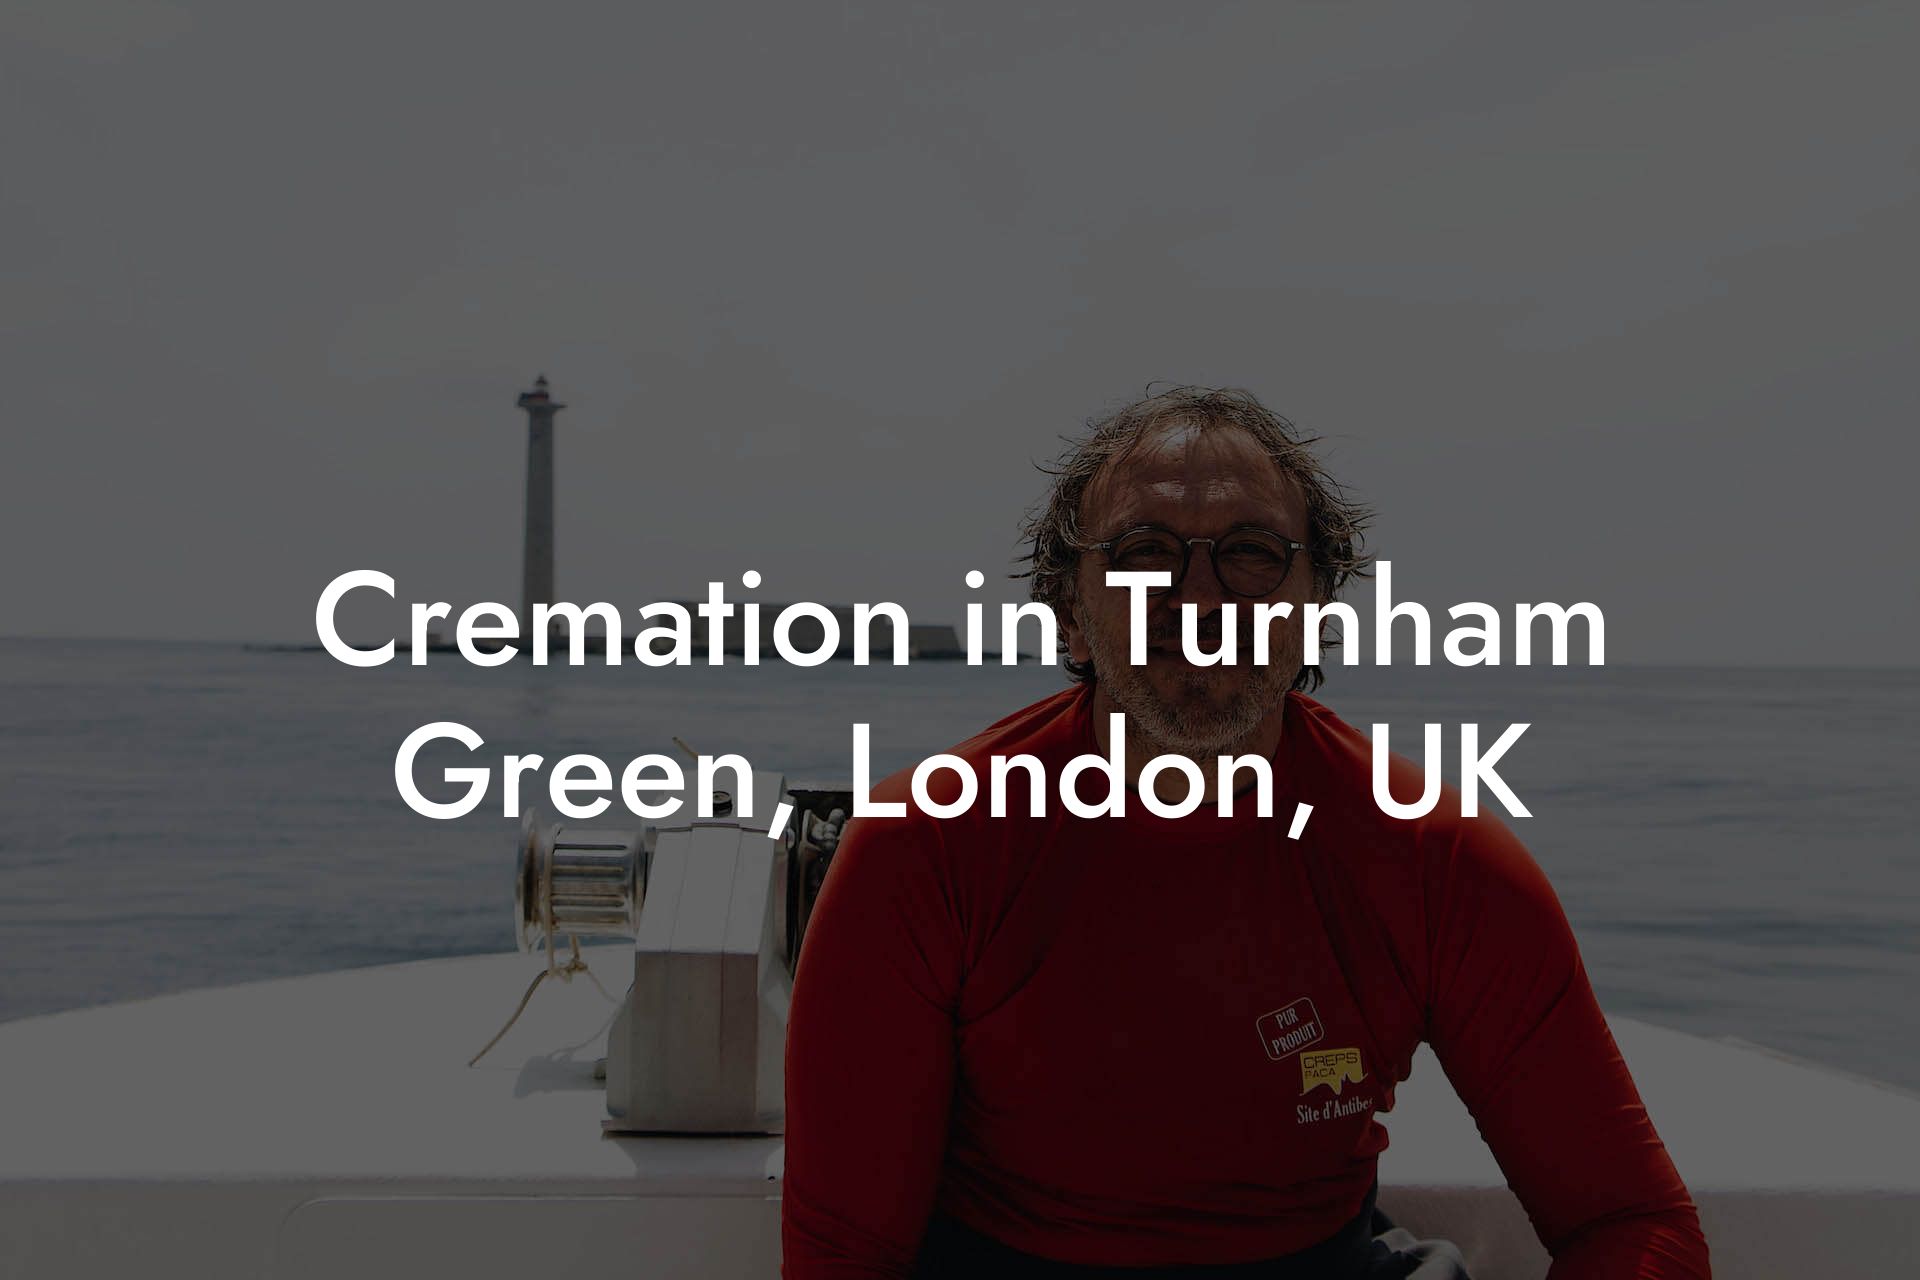 Cremation in Turnham Green, London, UK